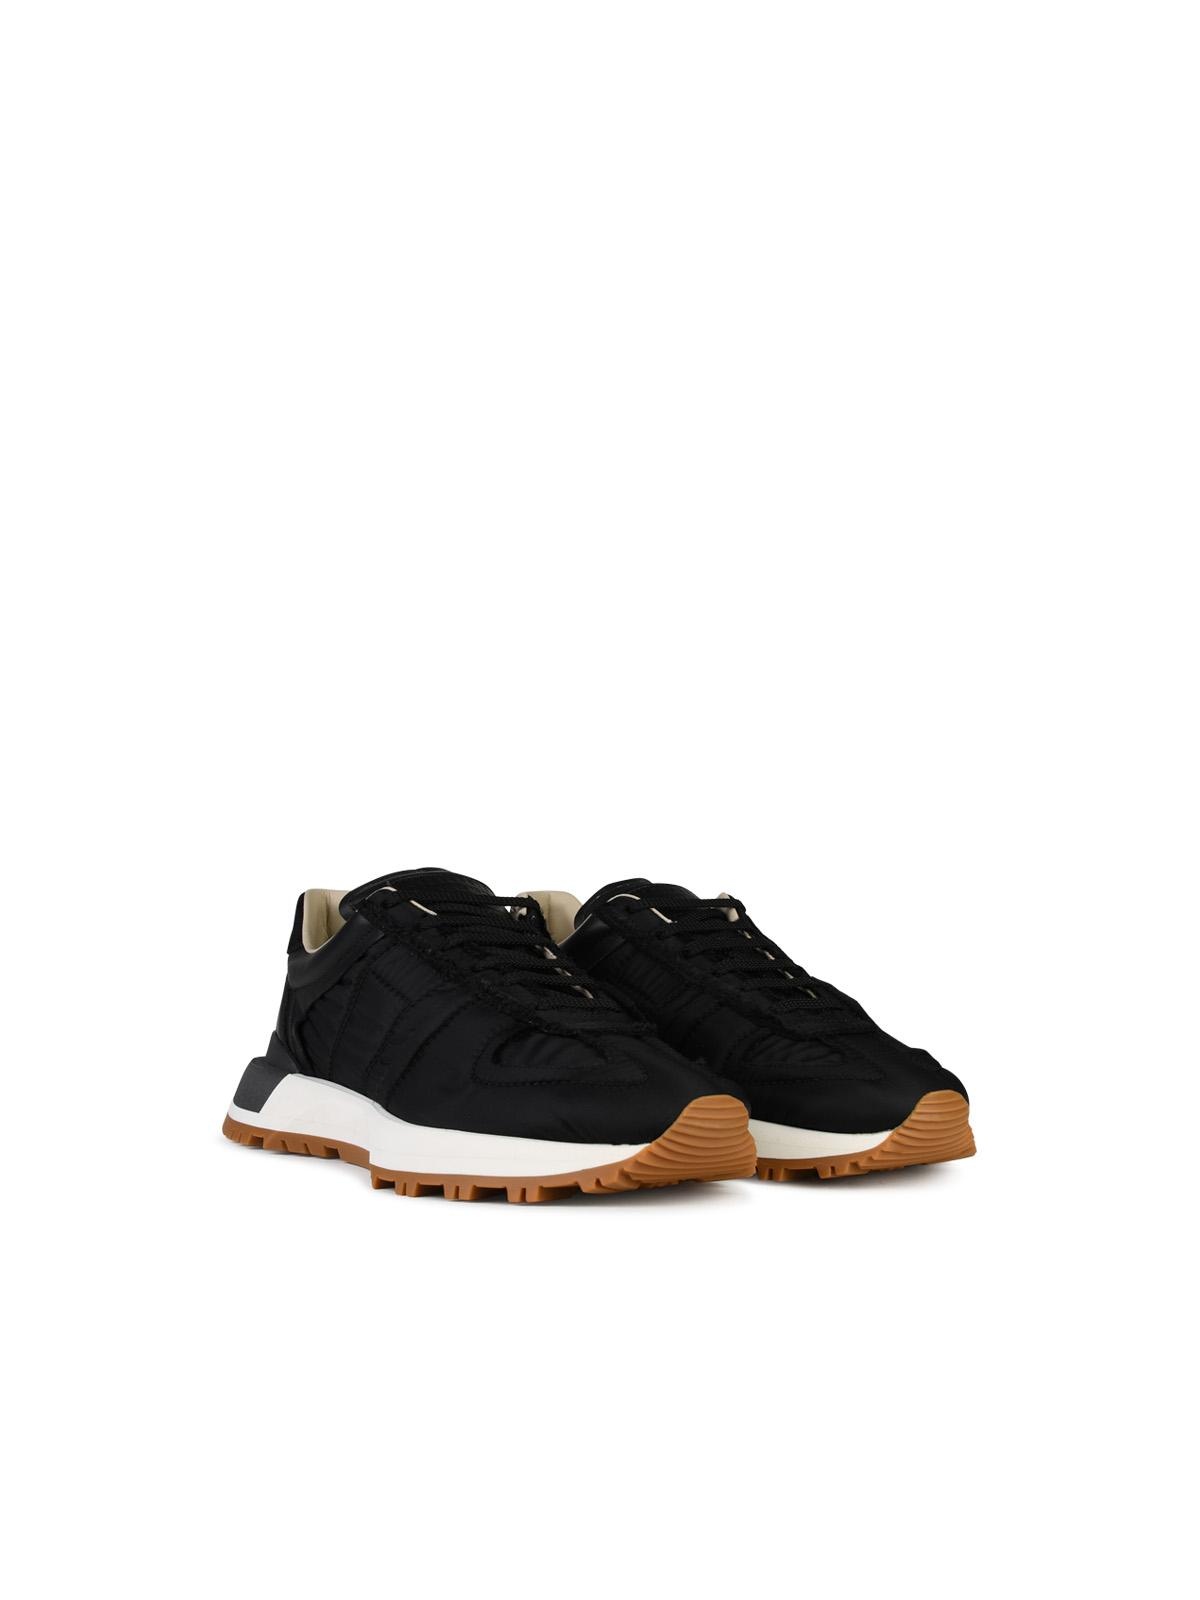 Maison Margiela '50-50' Black Leather Blend Sneakers Man - 2